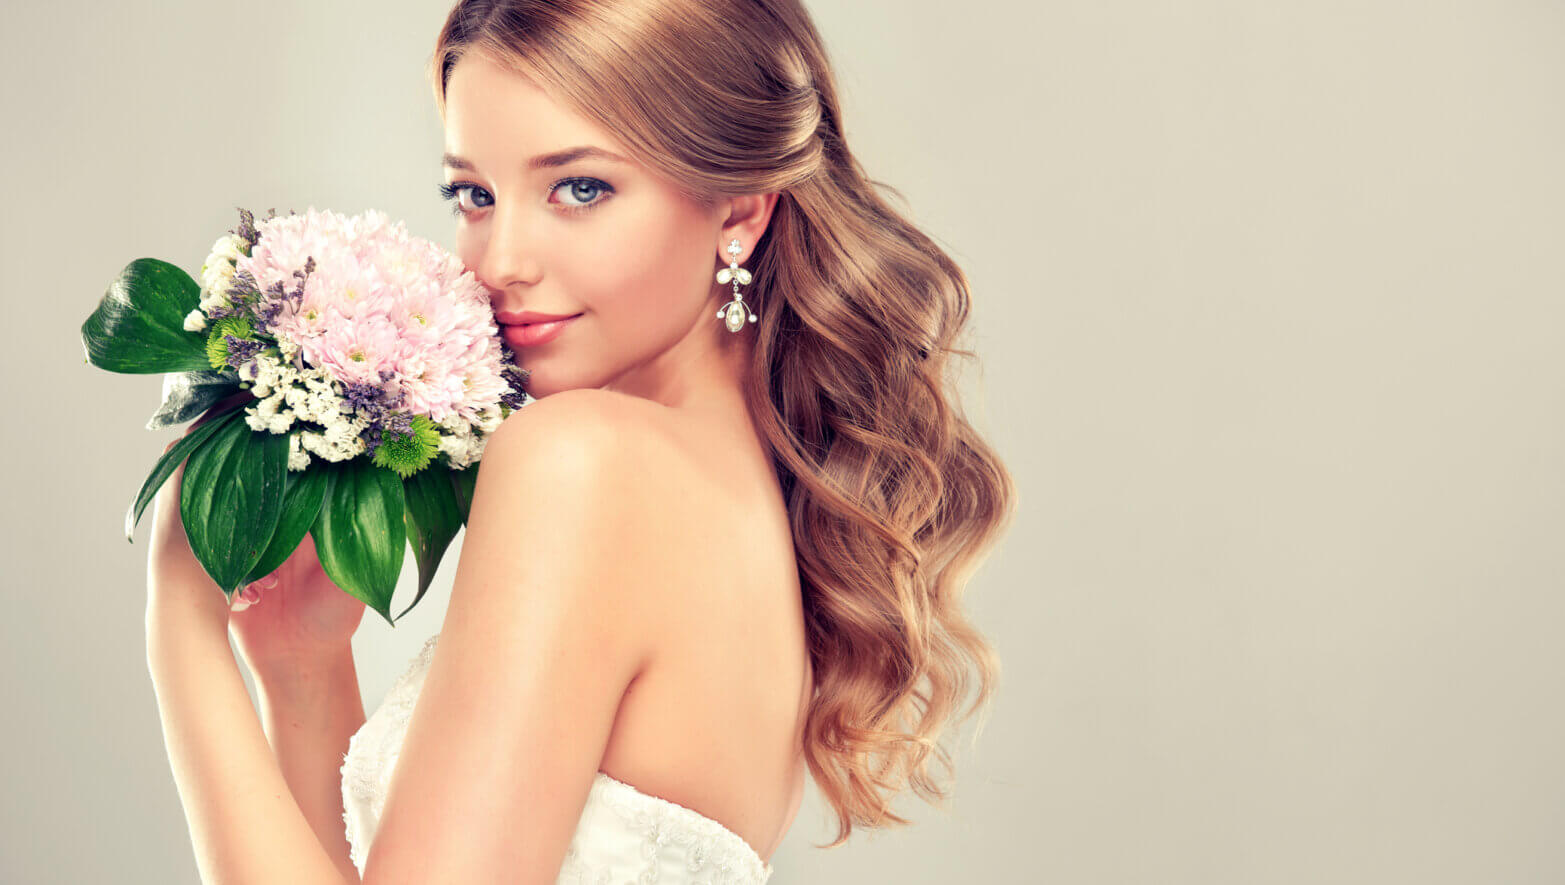 photo-girl-bride-wedding-dress-elegant-hairstyle-bouquet